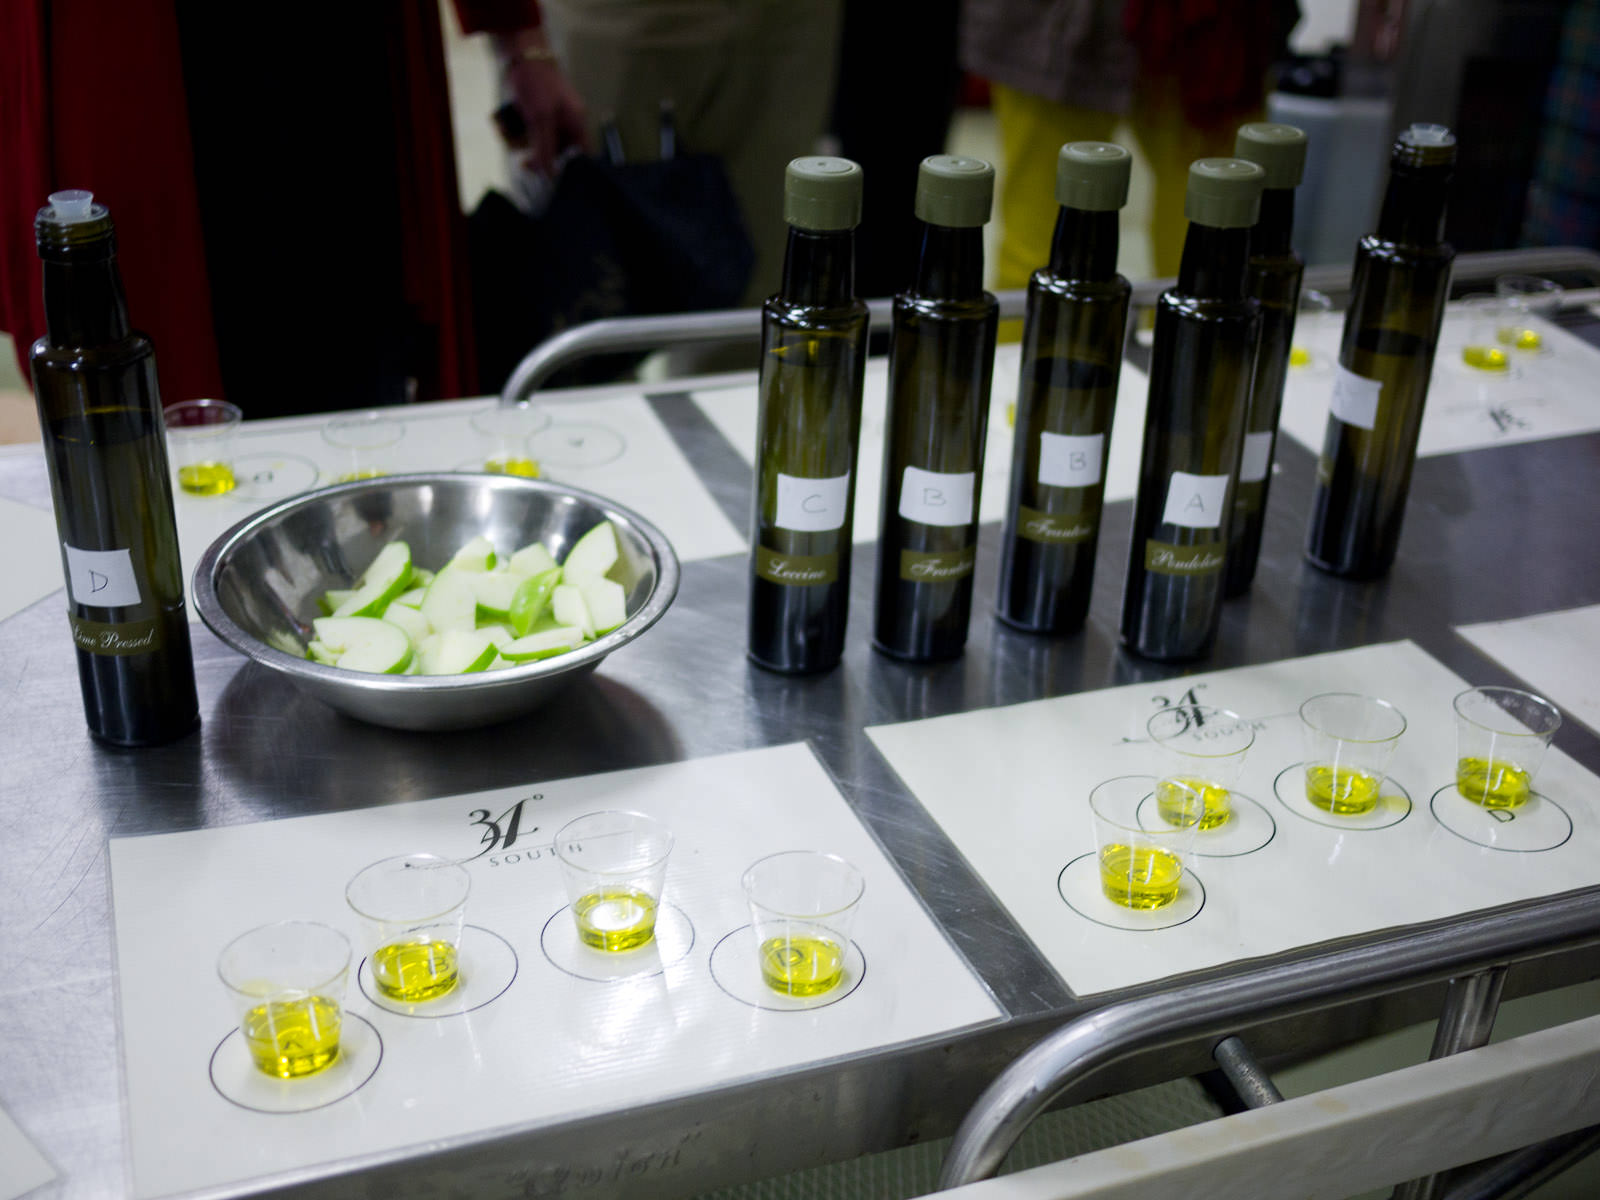 Olive oil tasting